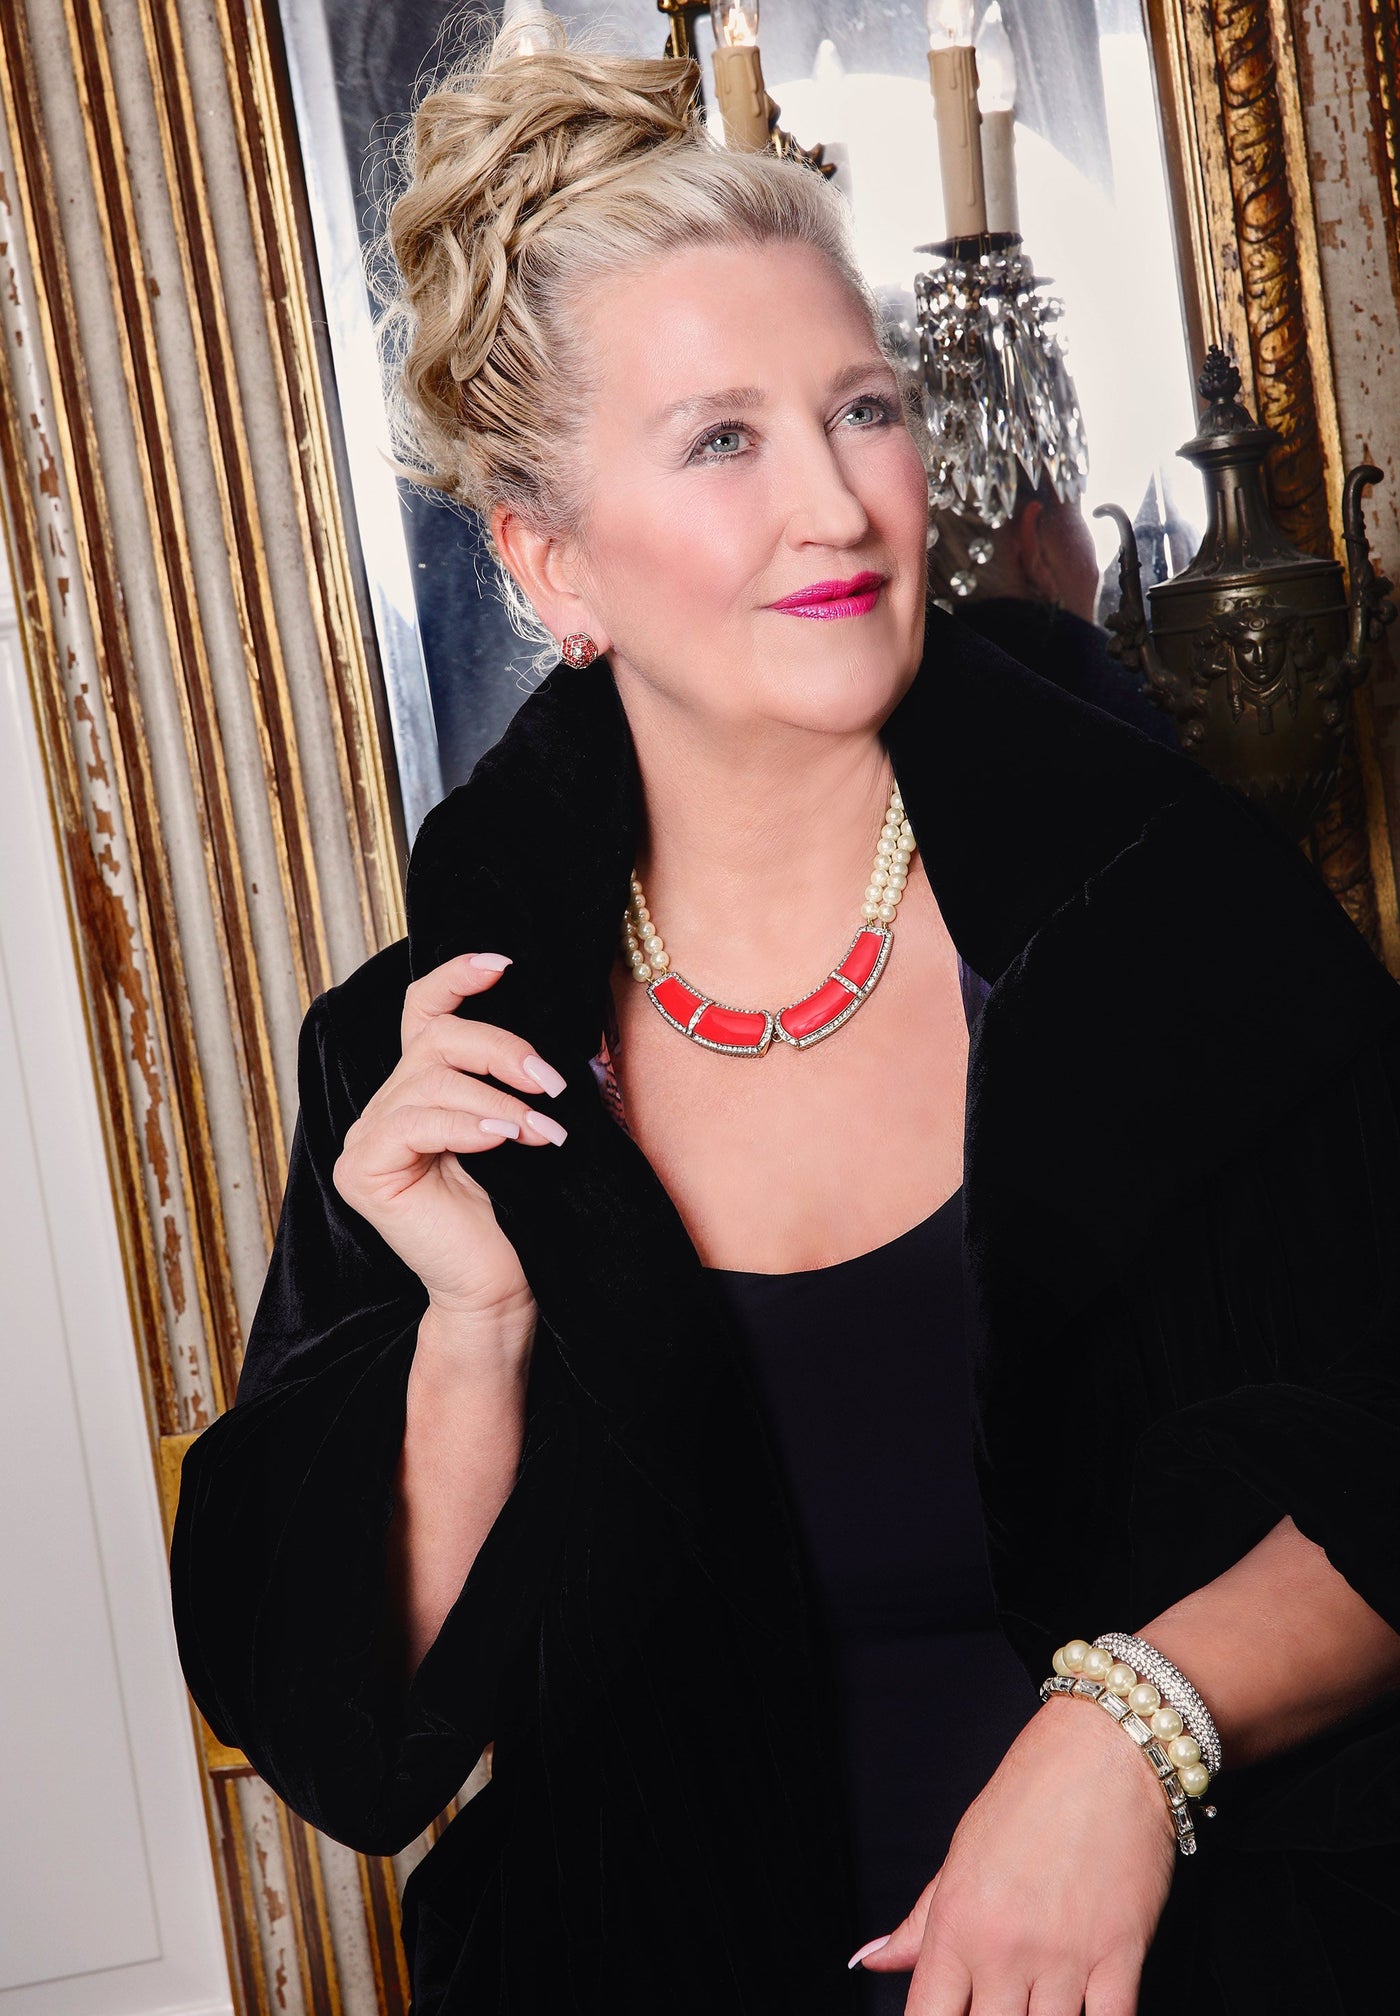 Heidi Daus® "Bar Harbor Elegance" Beaded Enamel & Crystal Necklace